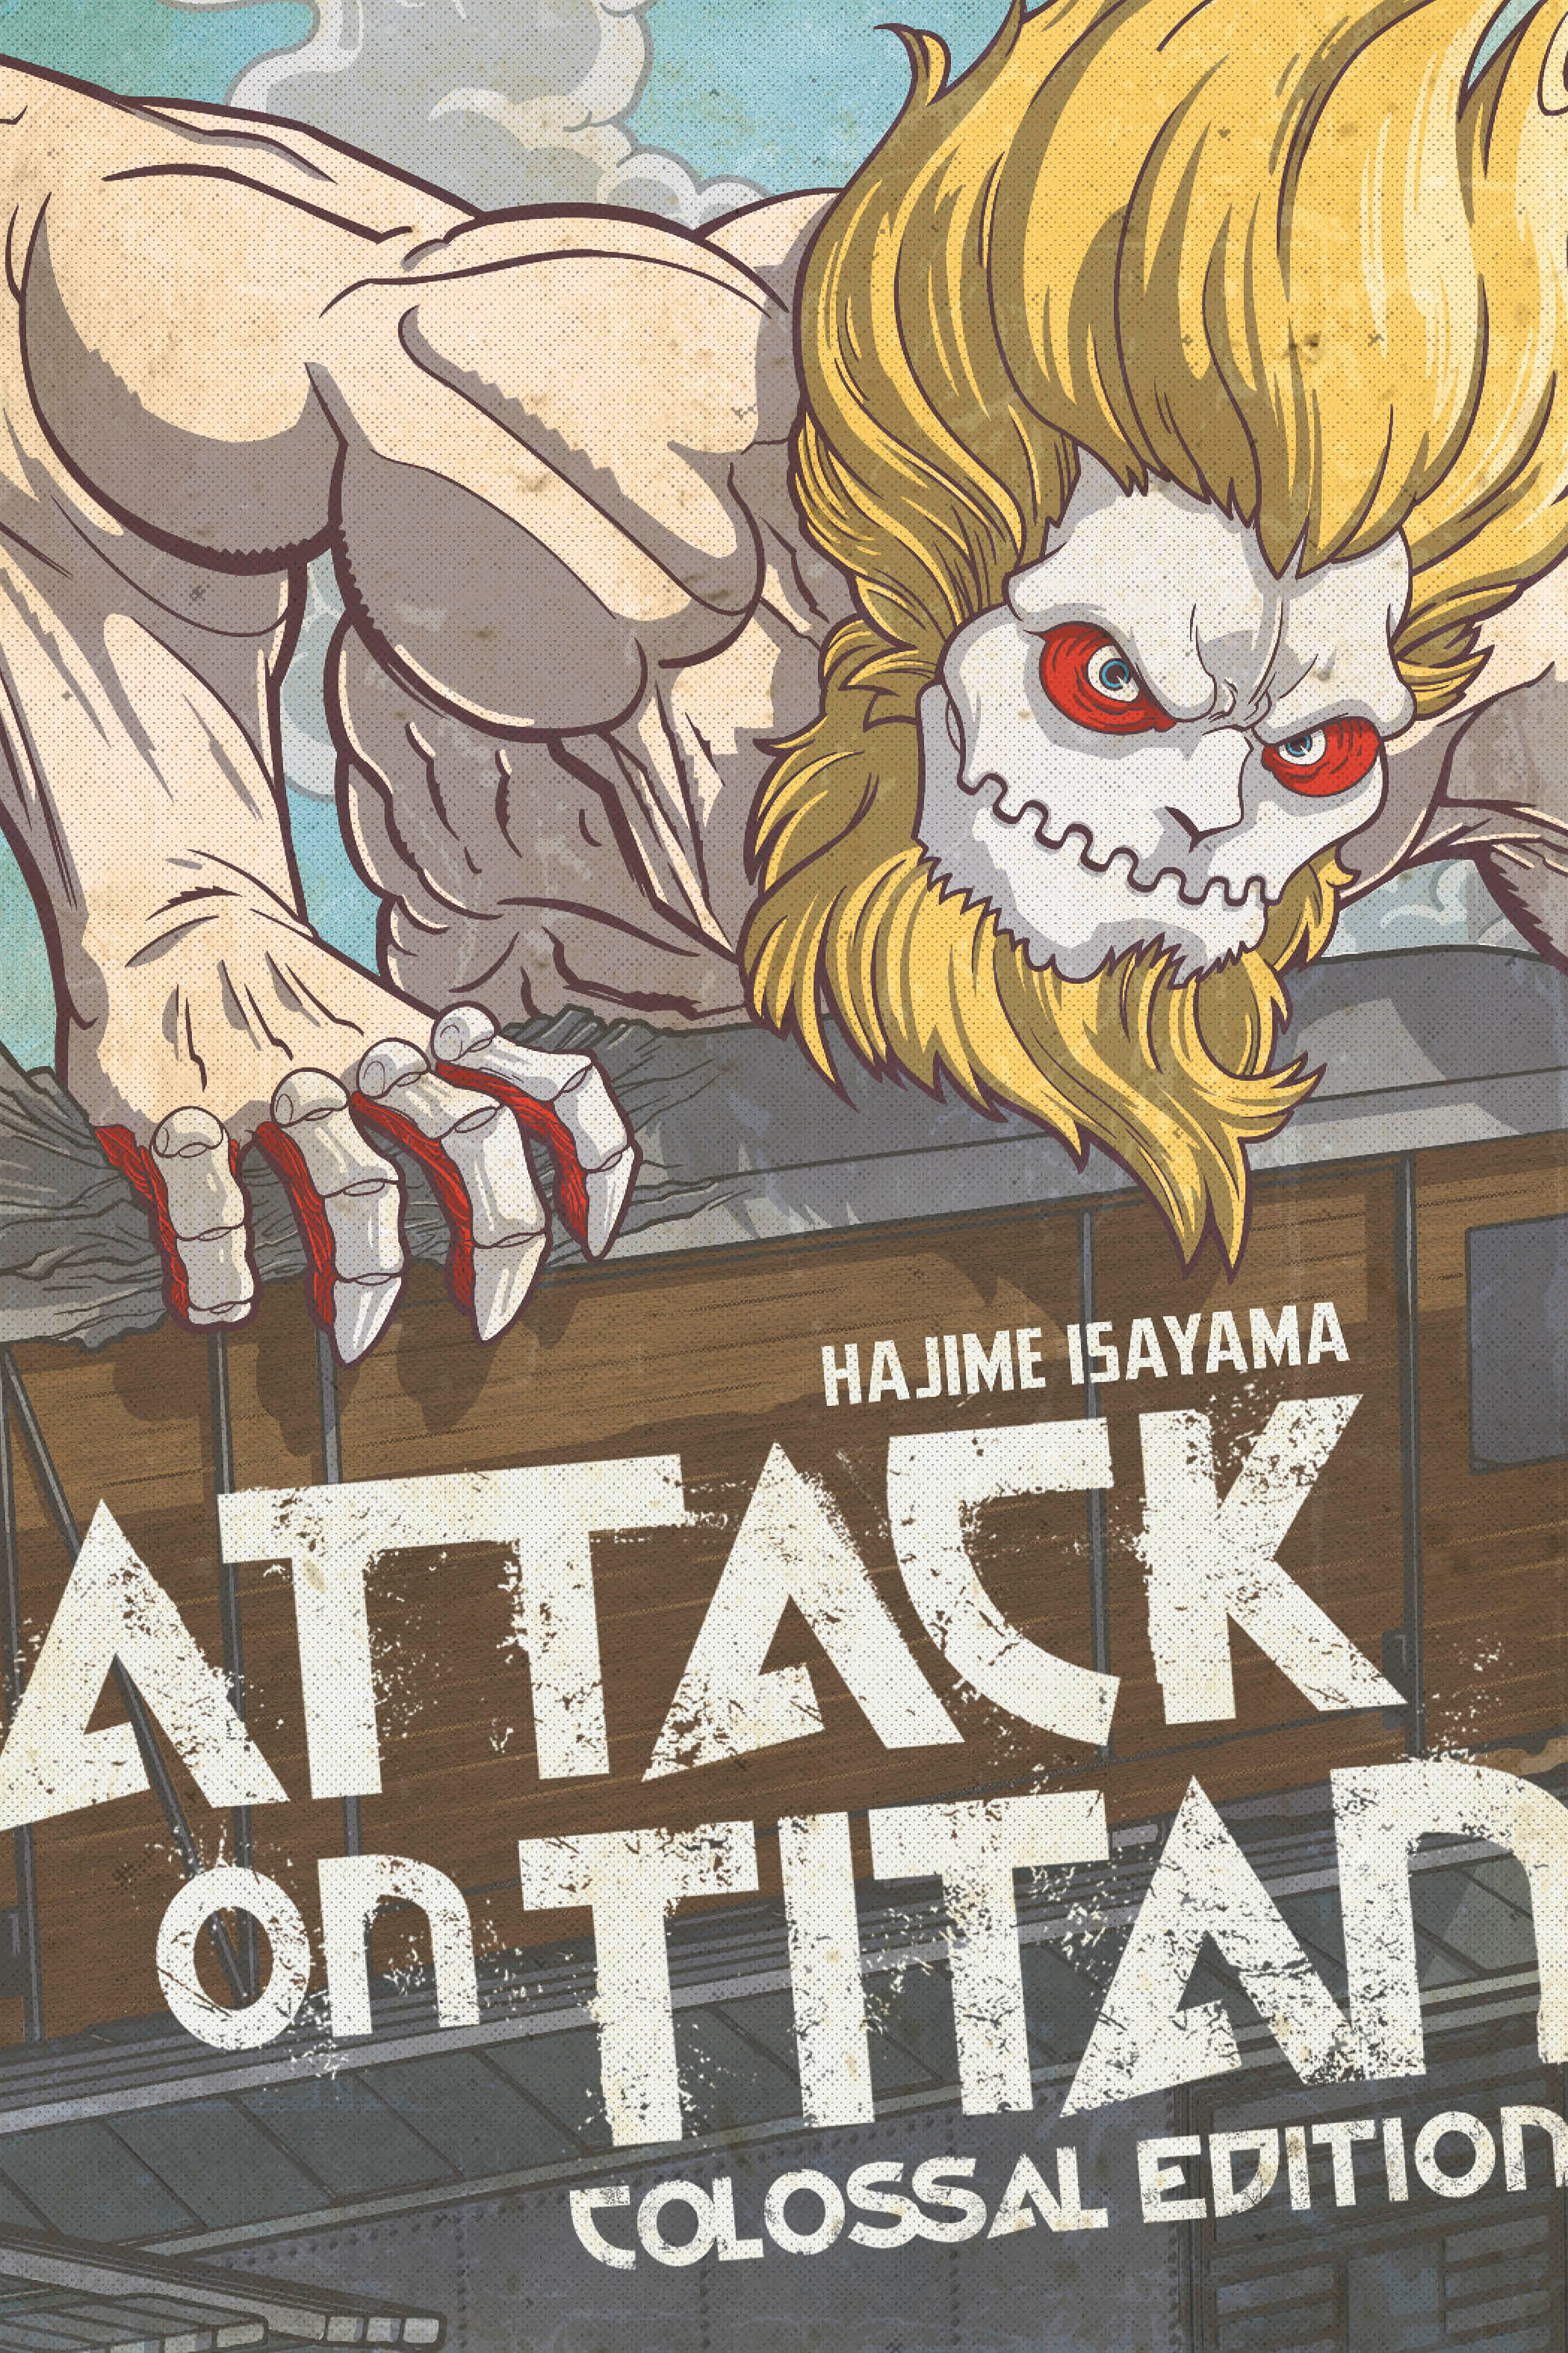 Attack on Titan Colossal Edition Manga Volume 6 (Mature)